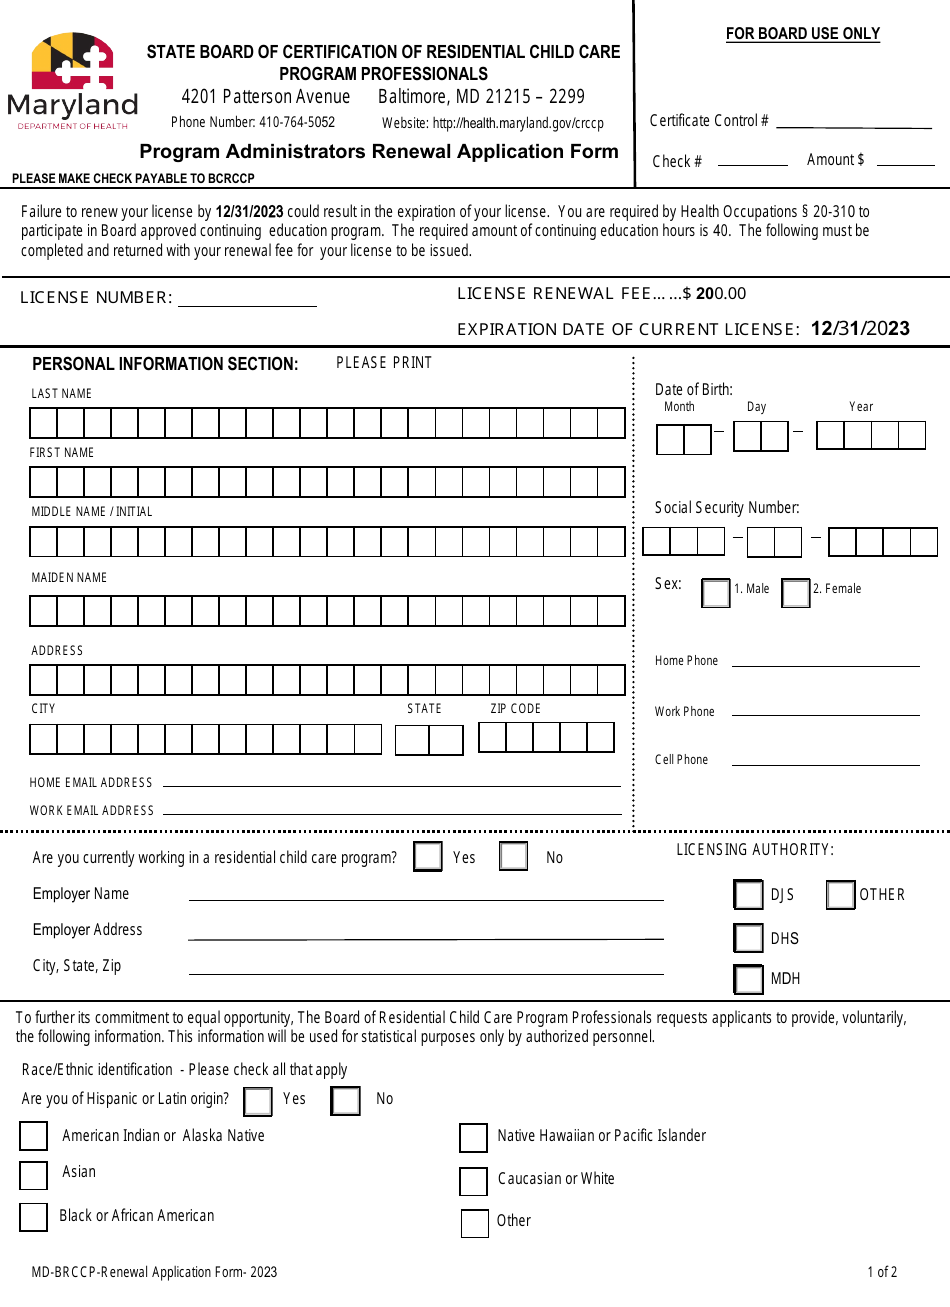 Form MD-BRCCP Program Administrators Renewal Application Form - Maryland, Page 1